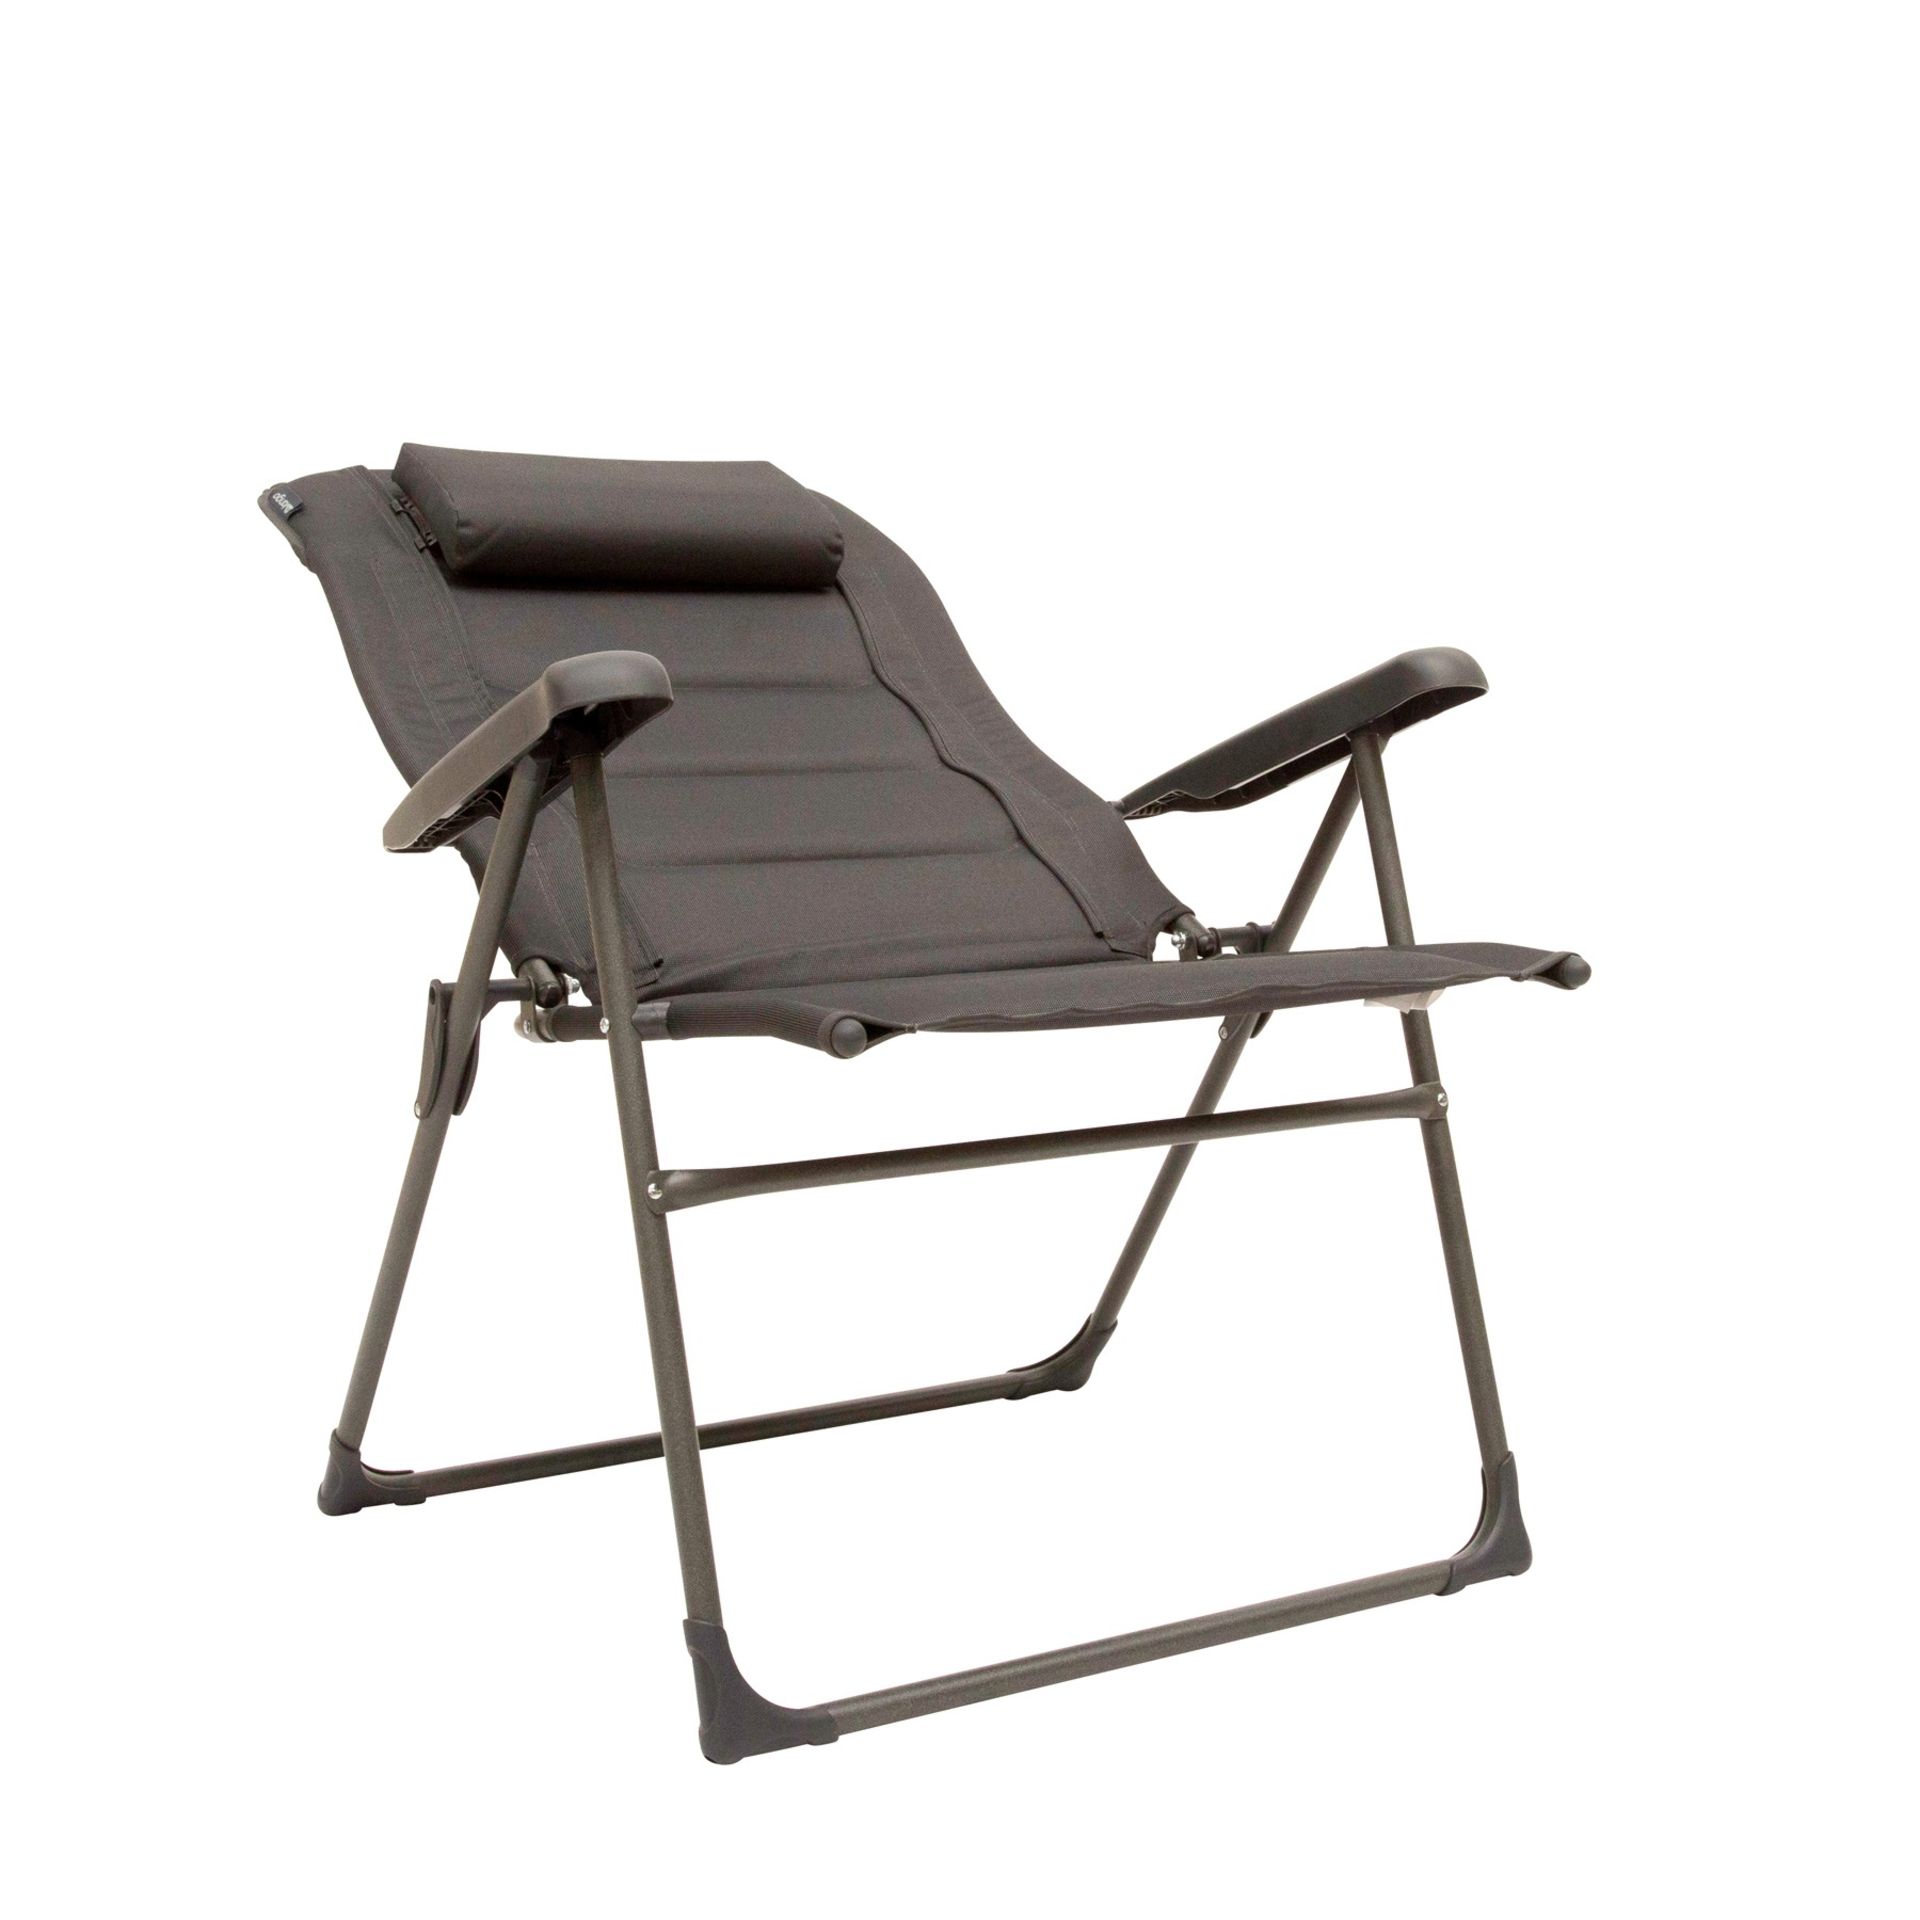 2 x Vango Hampton Grande DLX Chair, Excalibur, Ext - Image 4 of 4